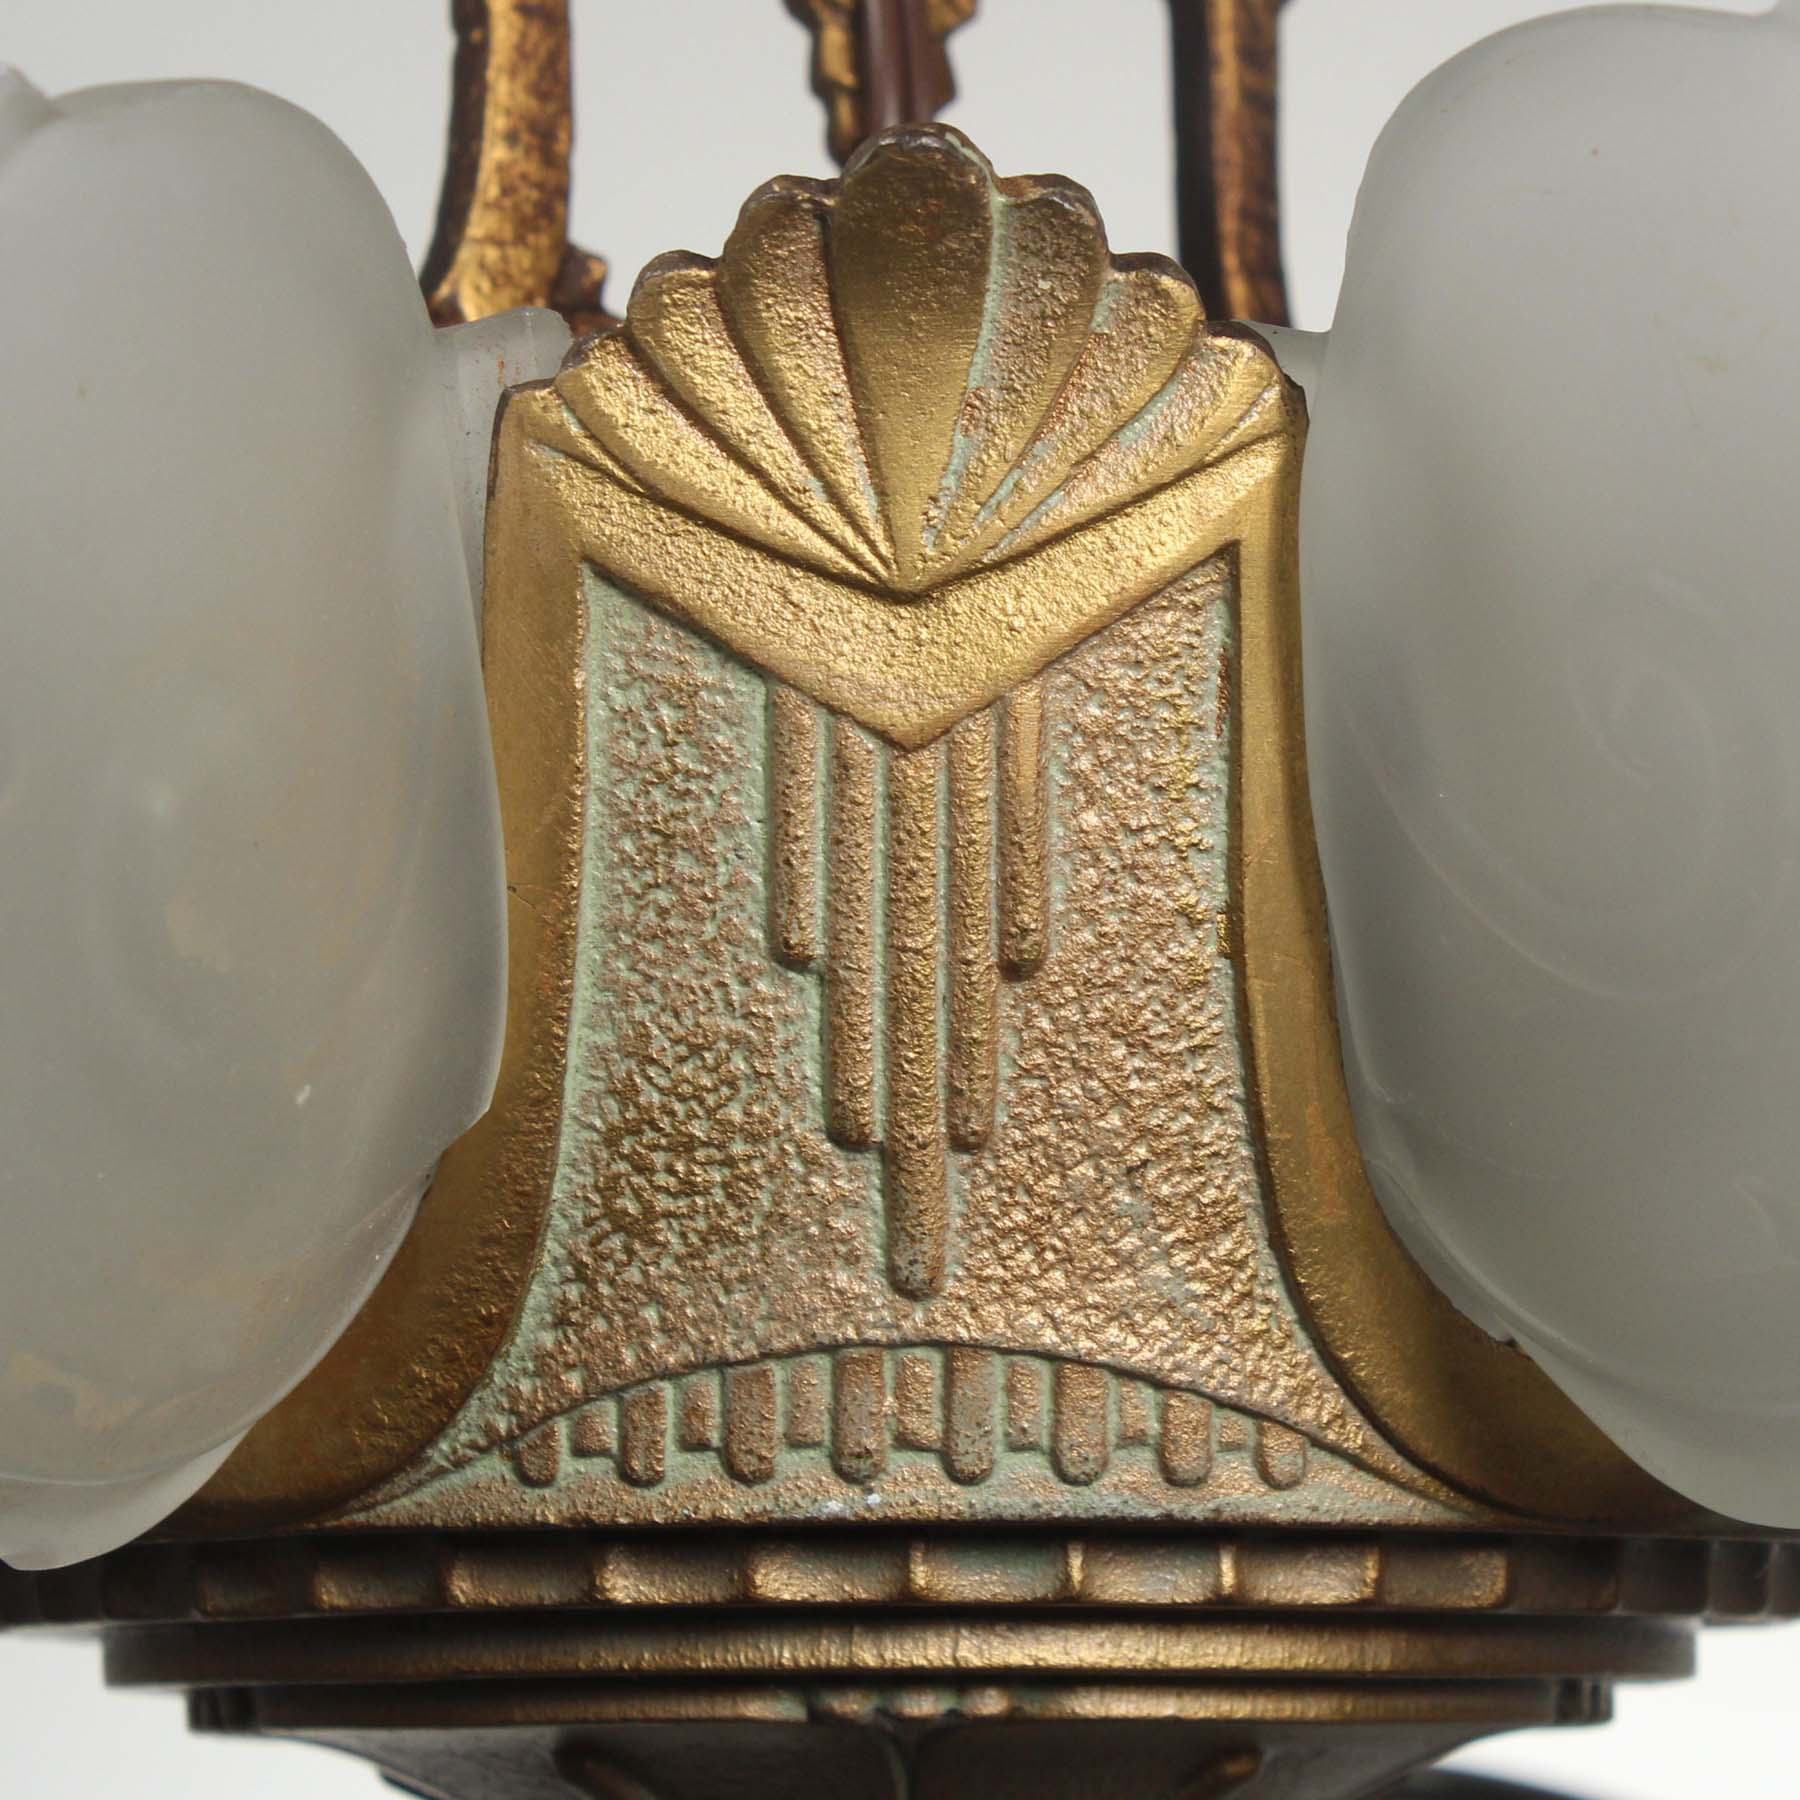 SOLD Antique Five-Light Art Deco Slip Shade Chandelier, "Warwick” Design by Glasco Electric-67733